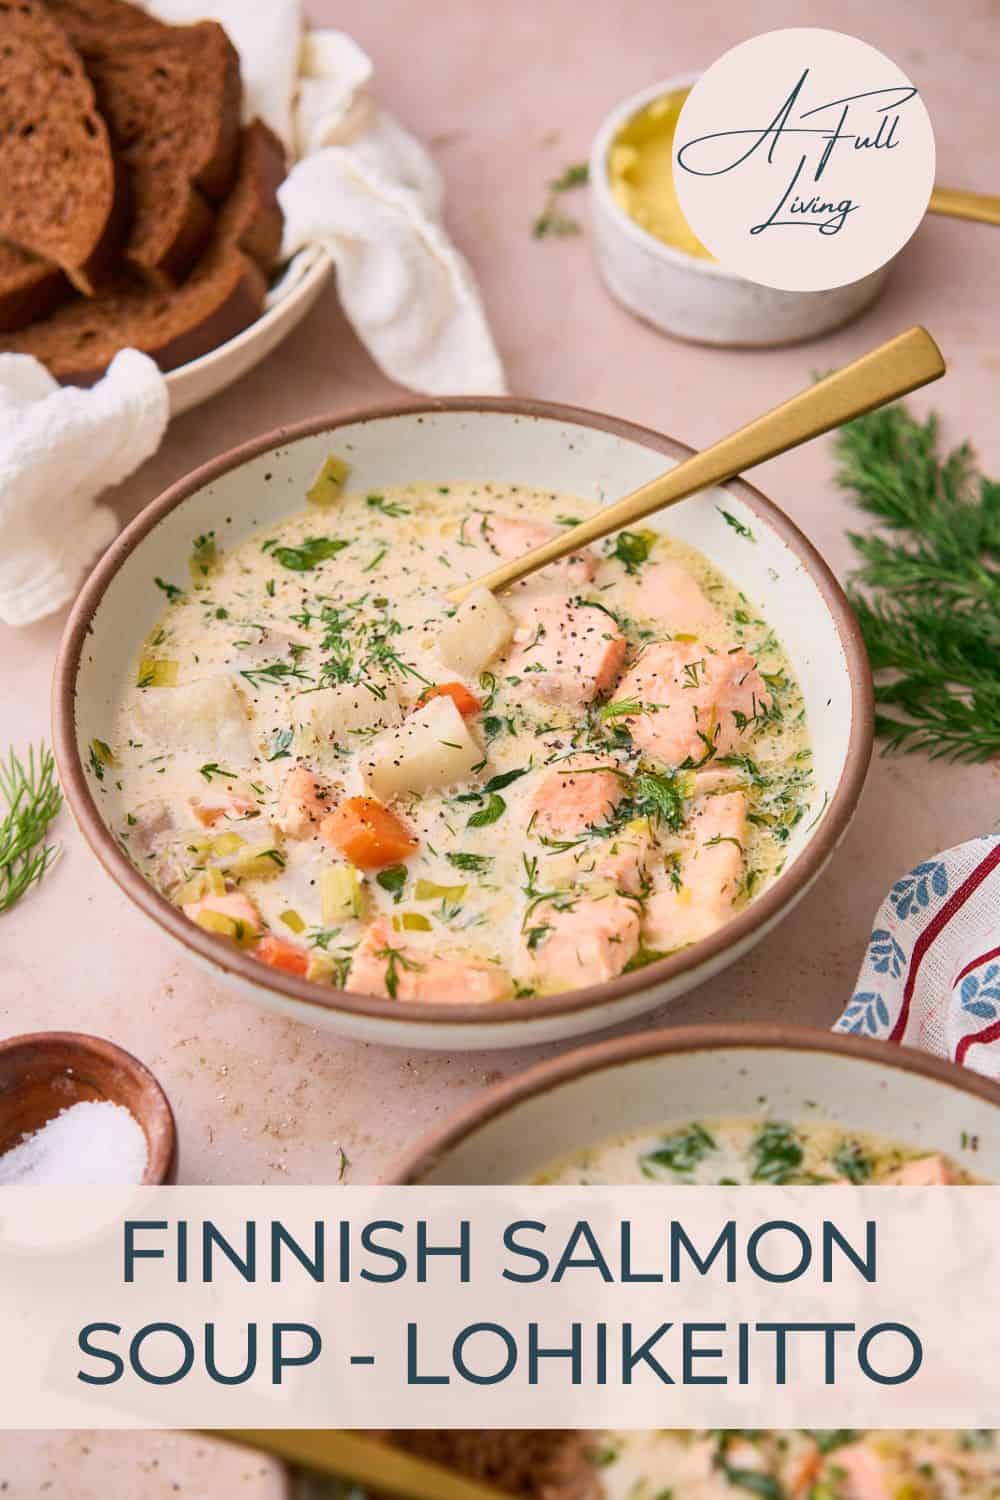 Finnish Salmon Soup Lohikeitto